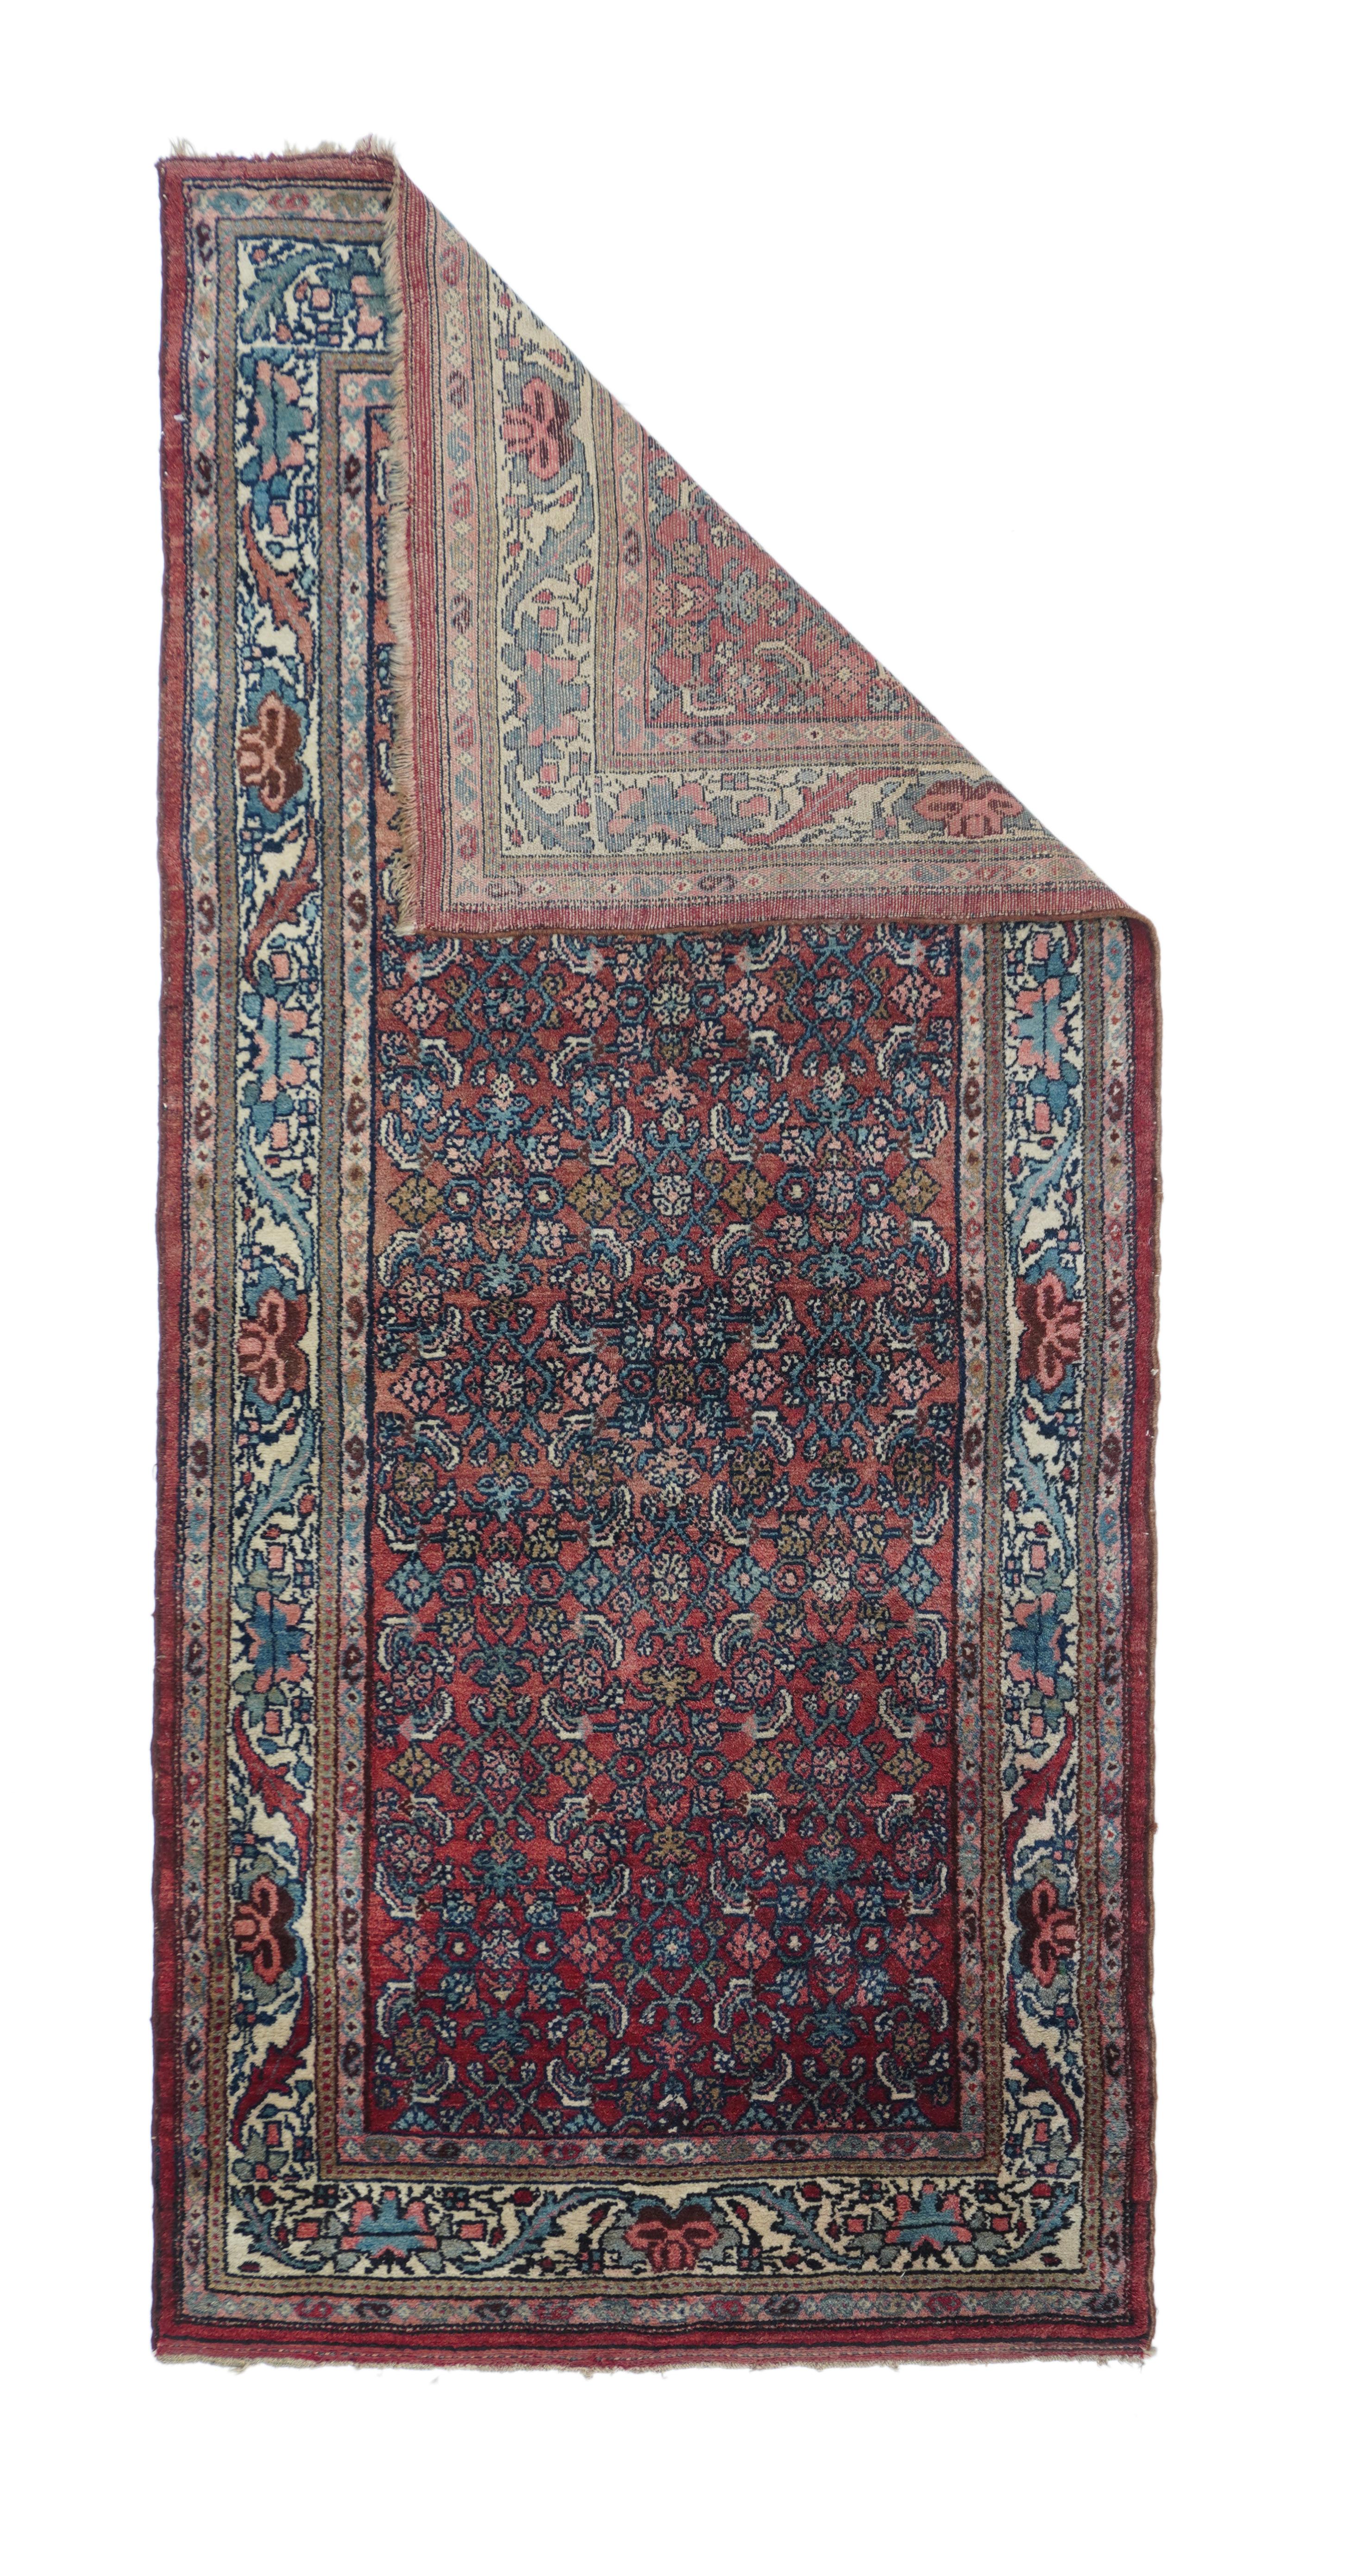 Antique Malayer rug, measures : 3'4'' x 7'2''.